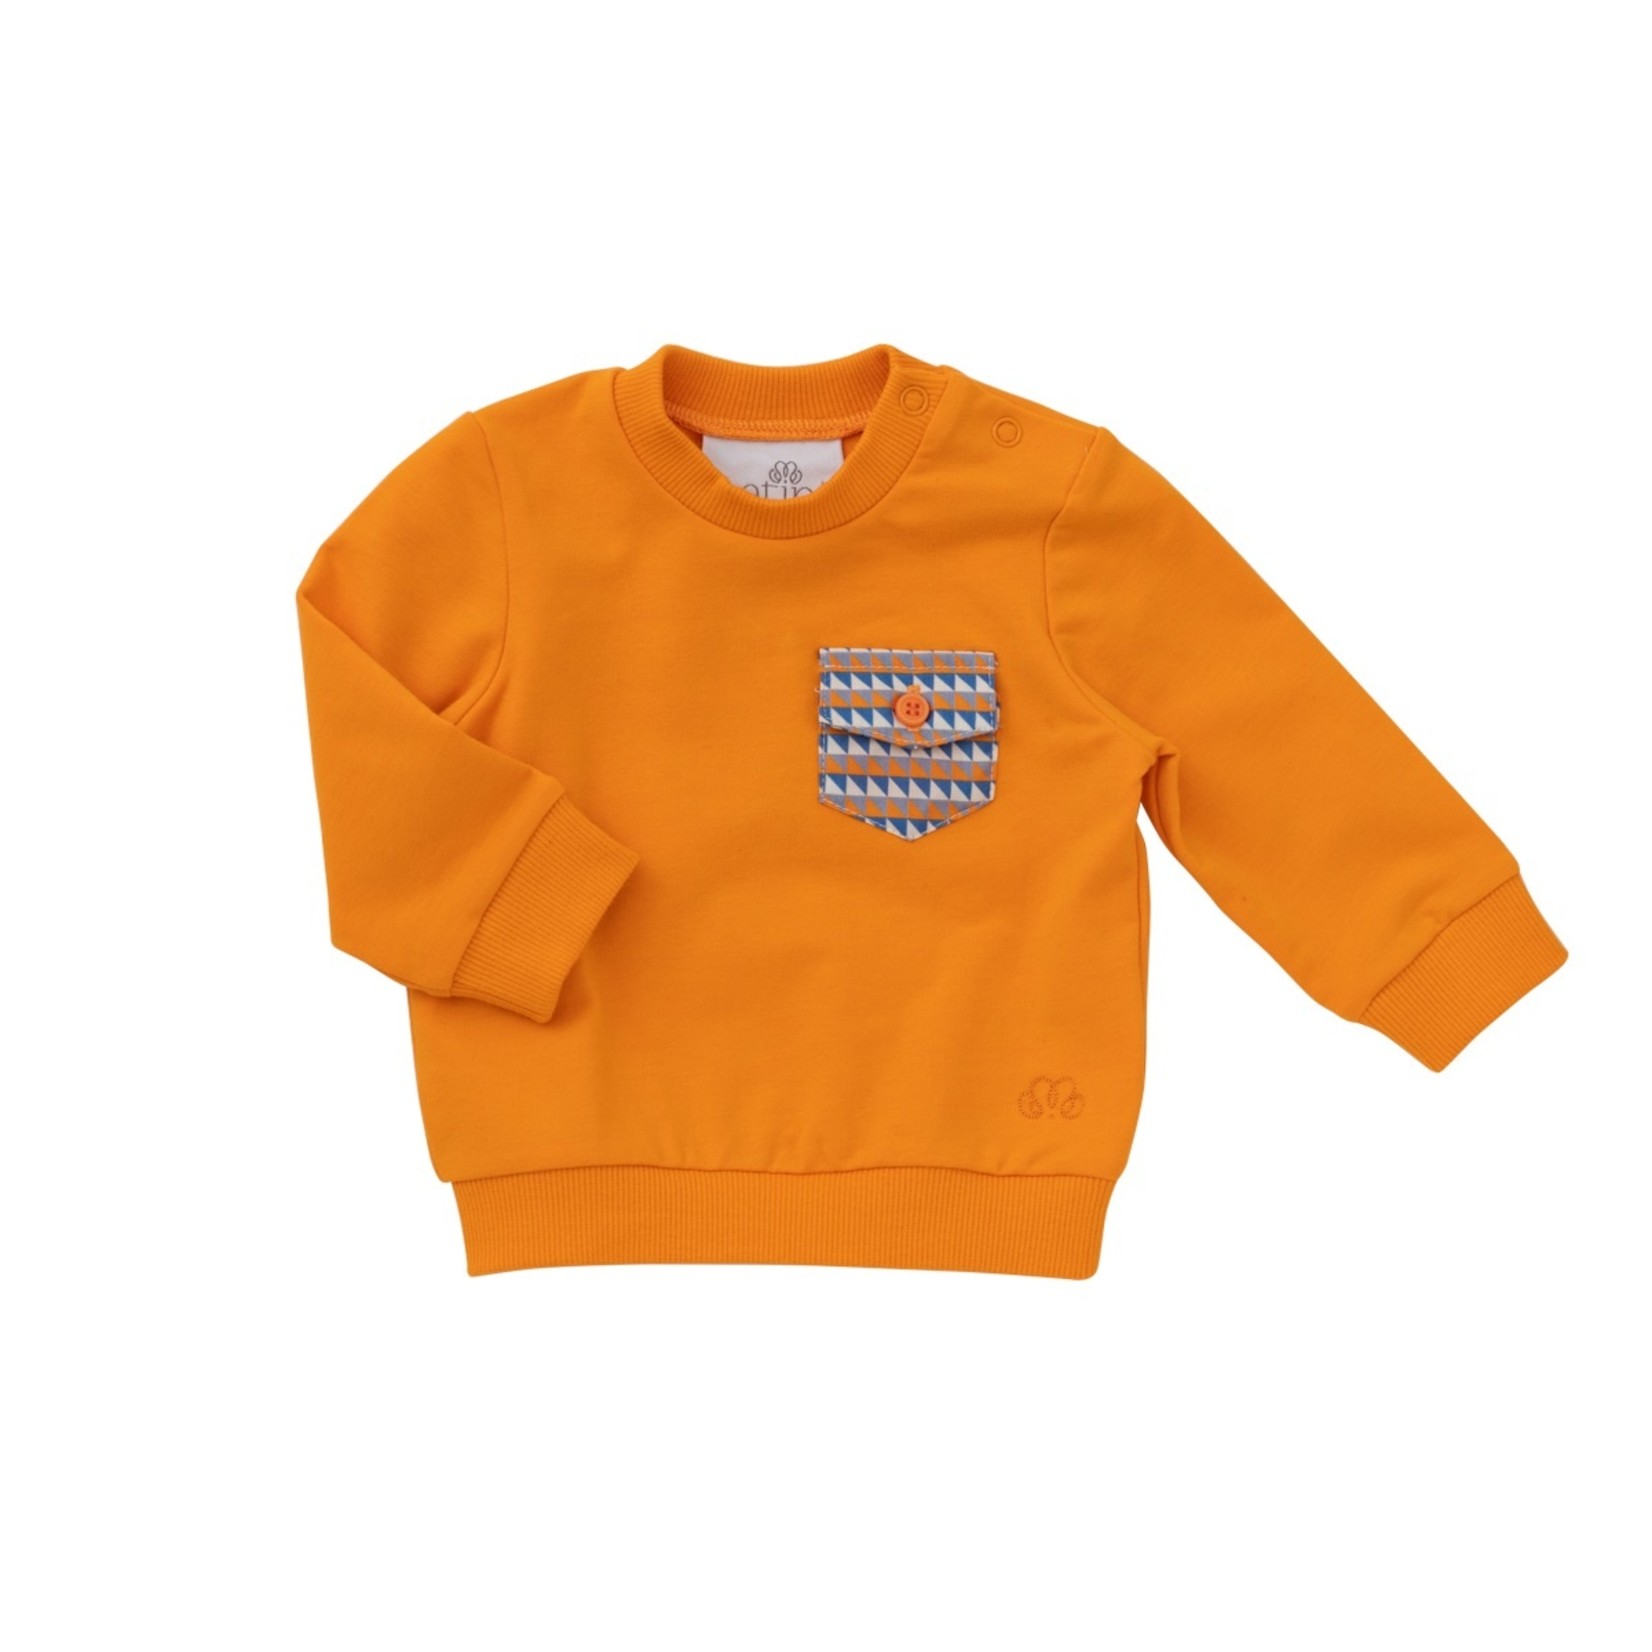 Natini Natini Sweater - Orange